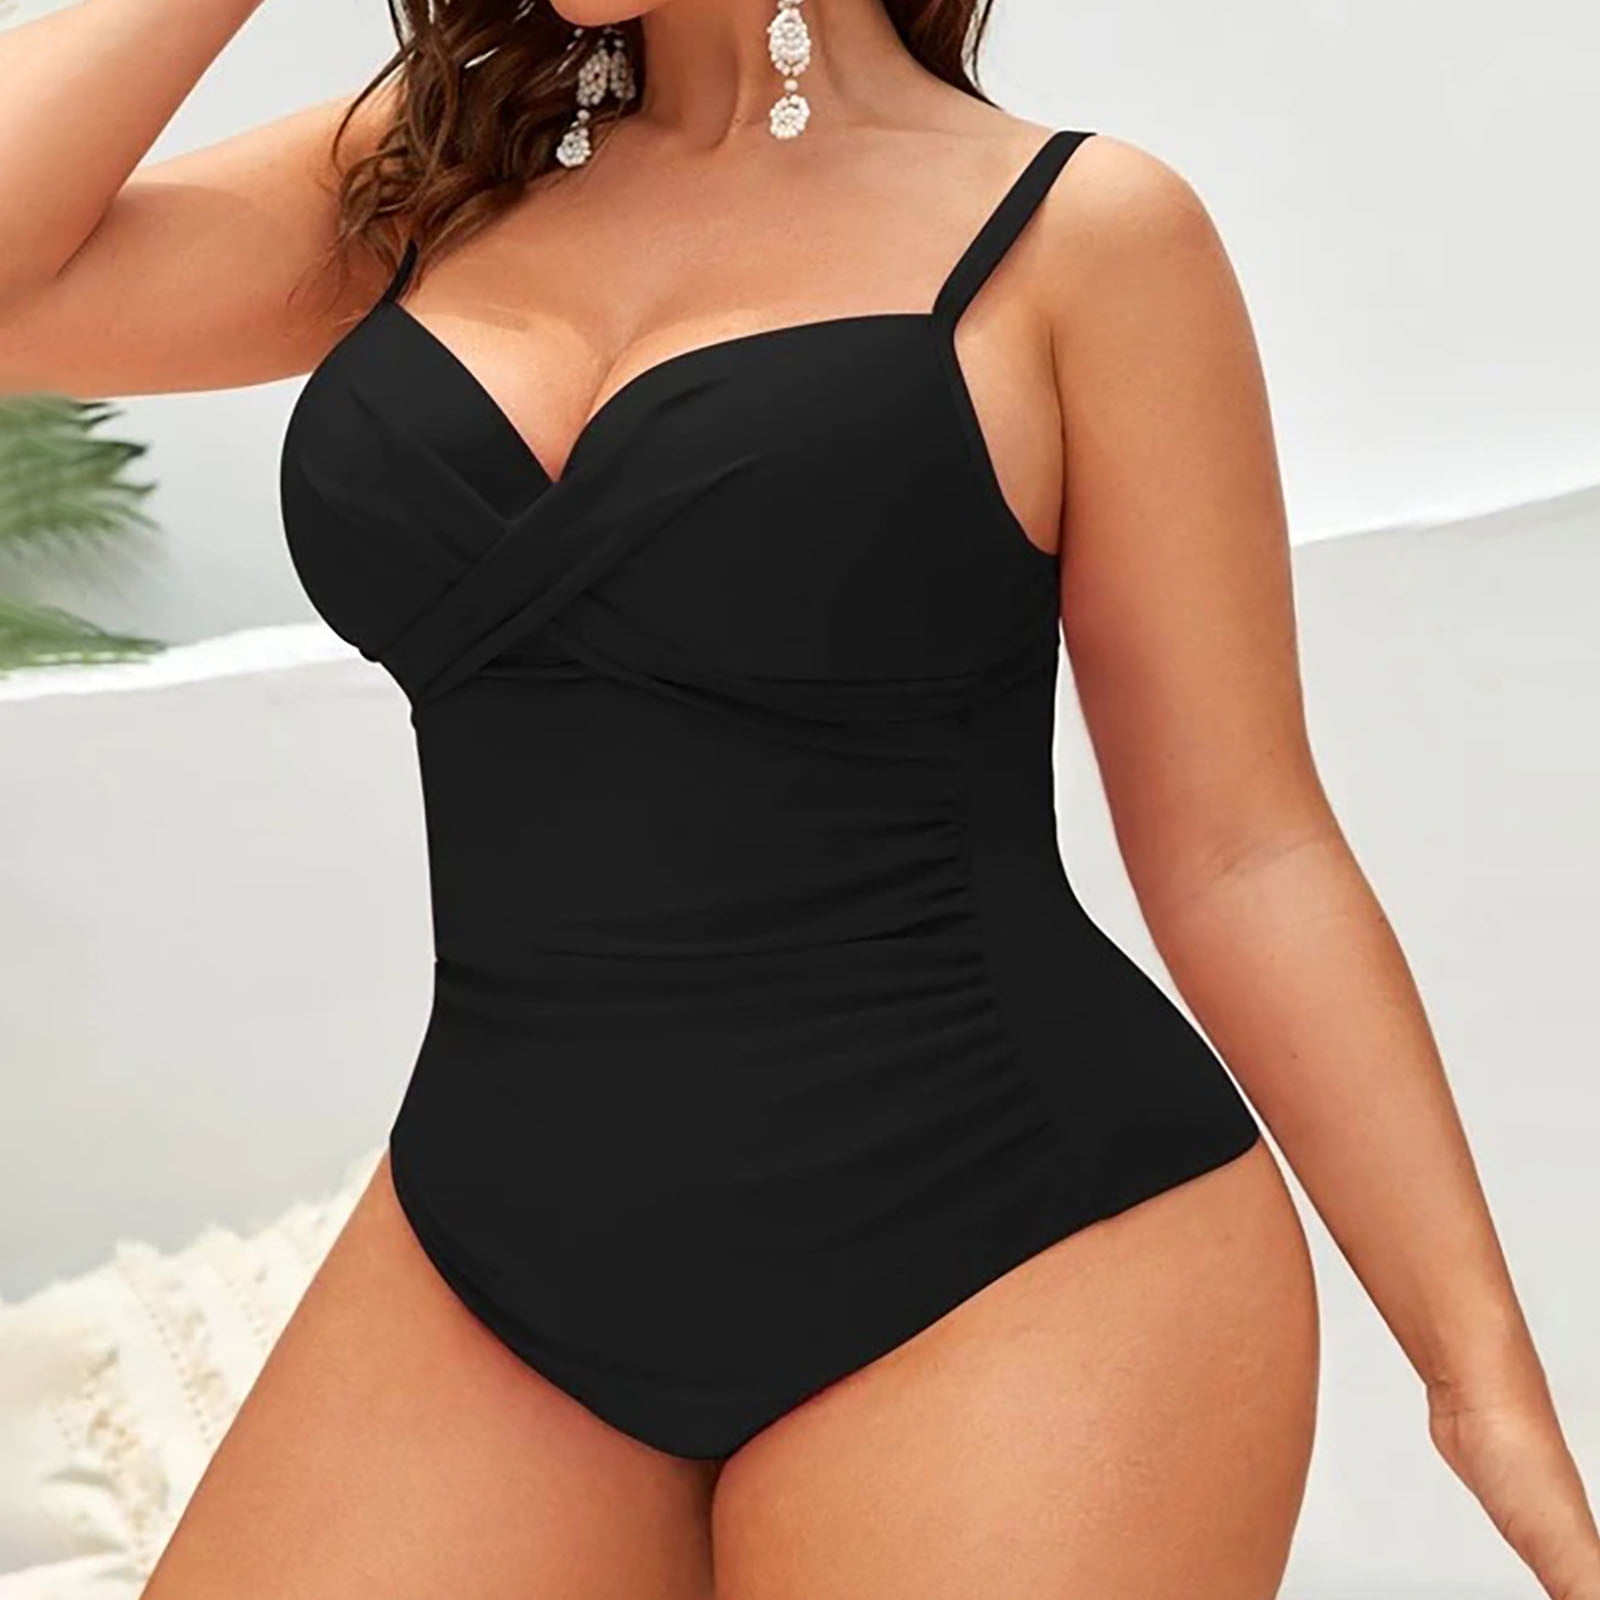 Aayomet Women's Plus Size Two Piece Swimsuit Print Bikini Swim Bra Pad  Underwire plus Size Bikini Tops for Large Bust,J XX-Large